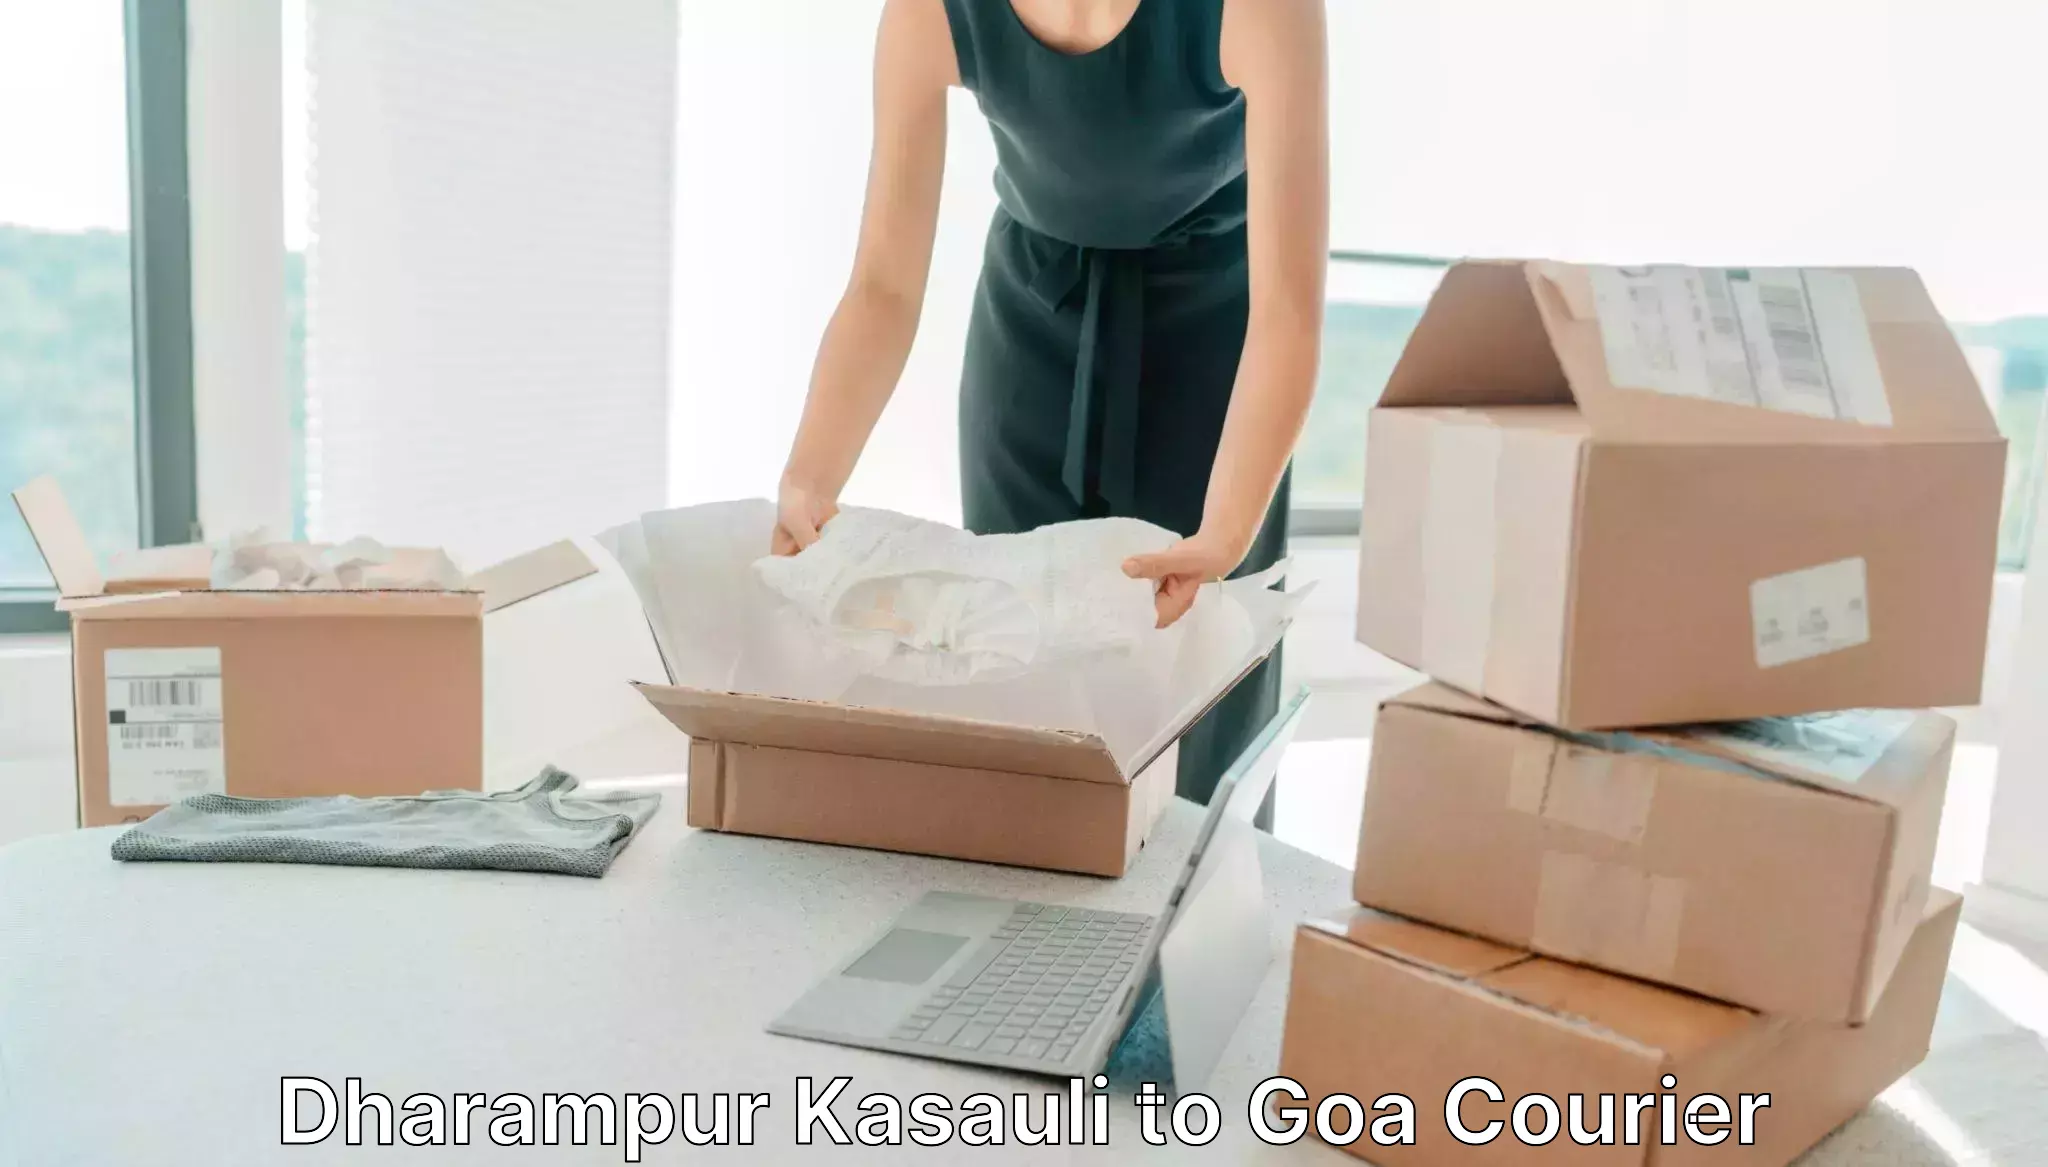 Enhanced tracking features Dharampur Kasauli to Goa